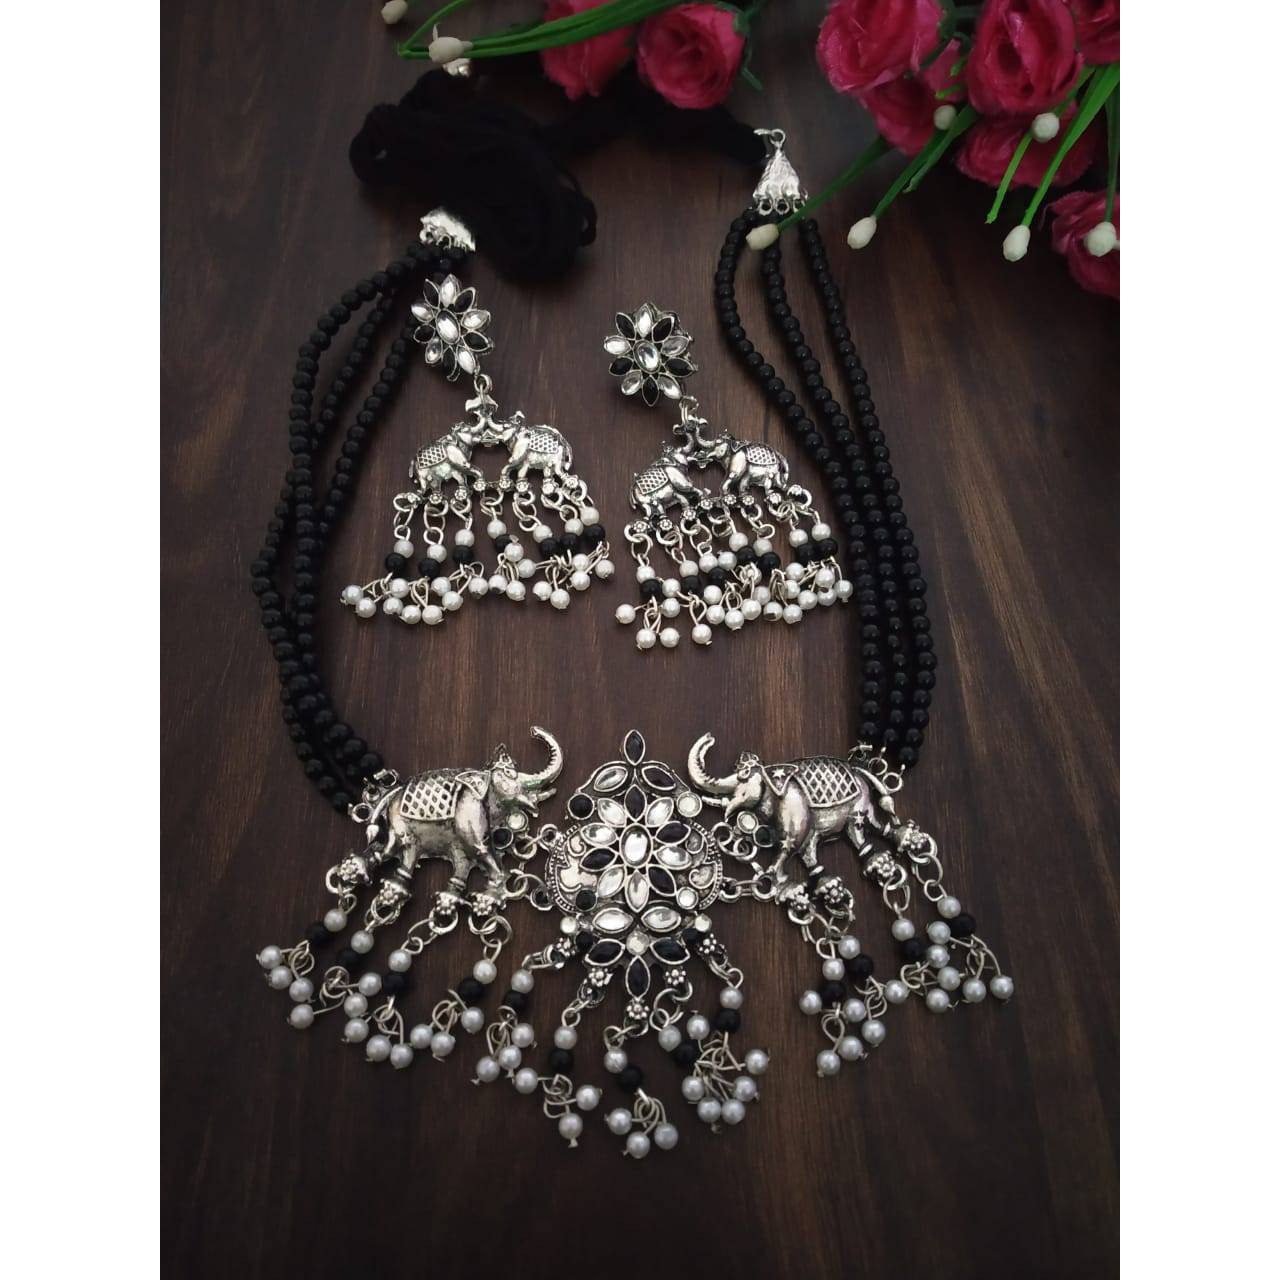 Elephant beads choker set, multicolor choker set, oxidised German silver choker, gifts for her, handmade choker necklace